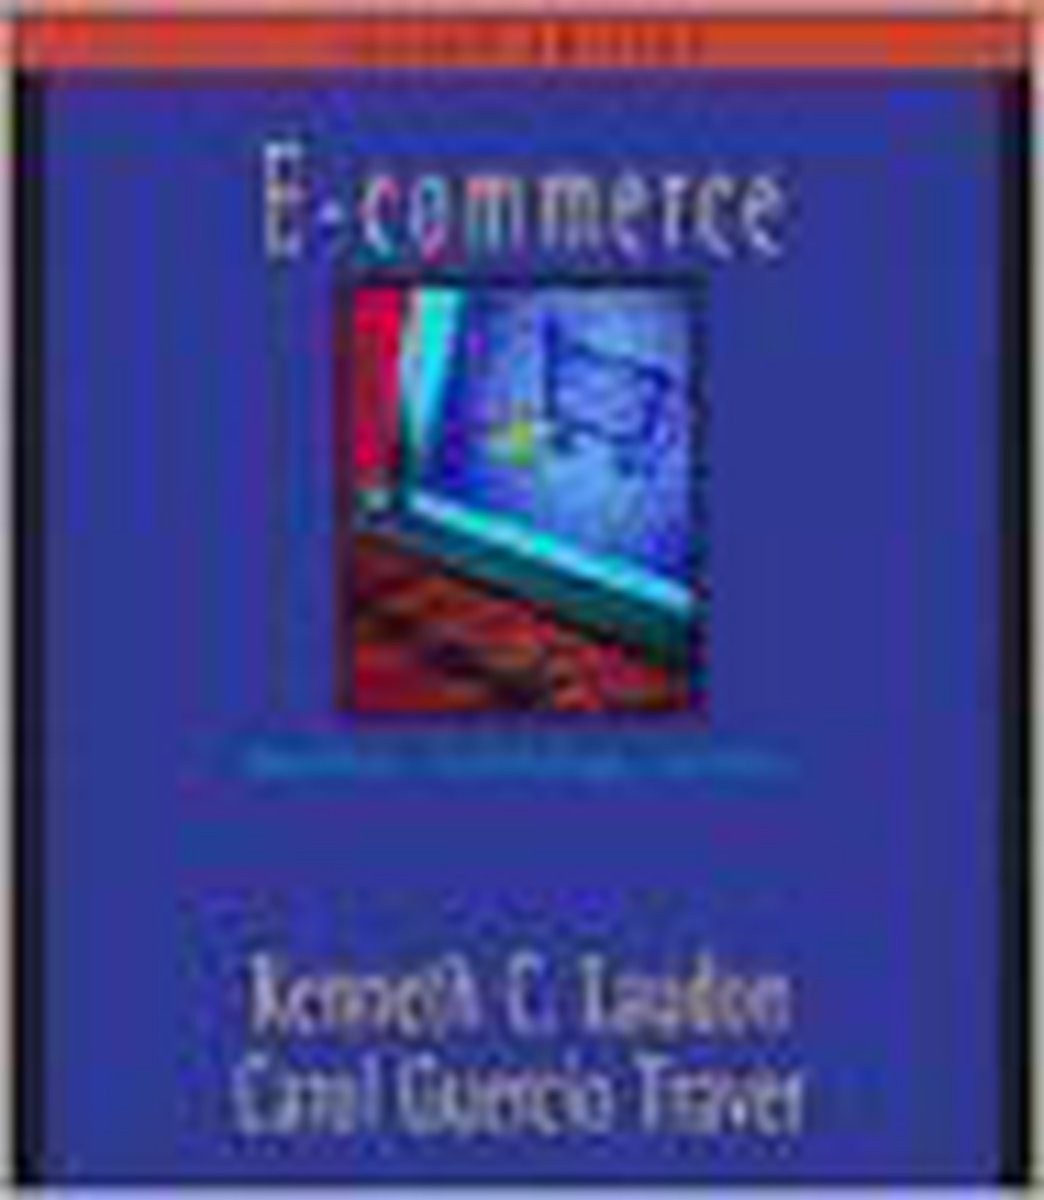 E-commerce - Kenneth C Laudon